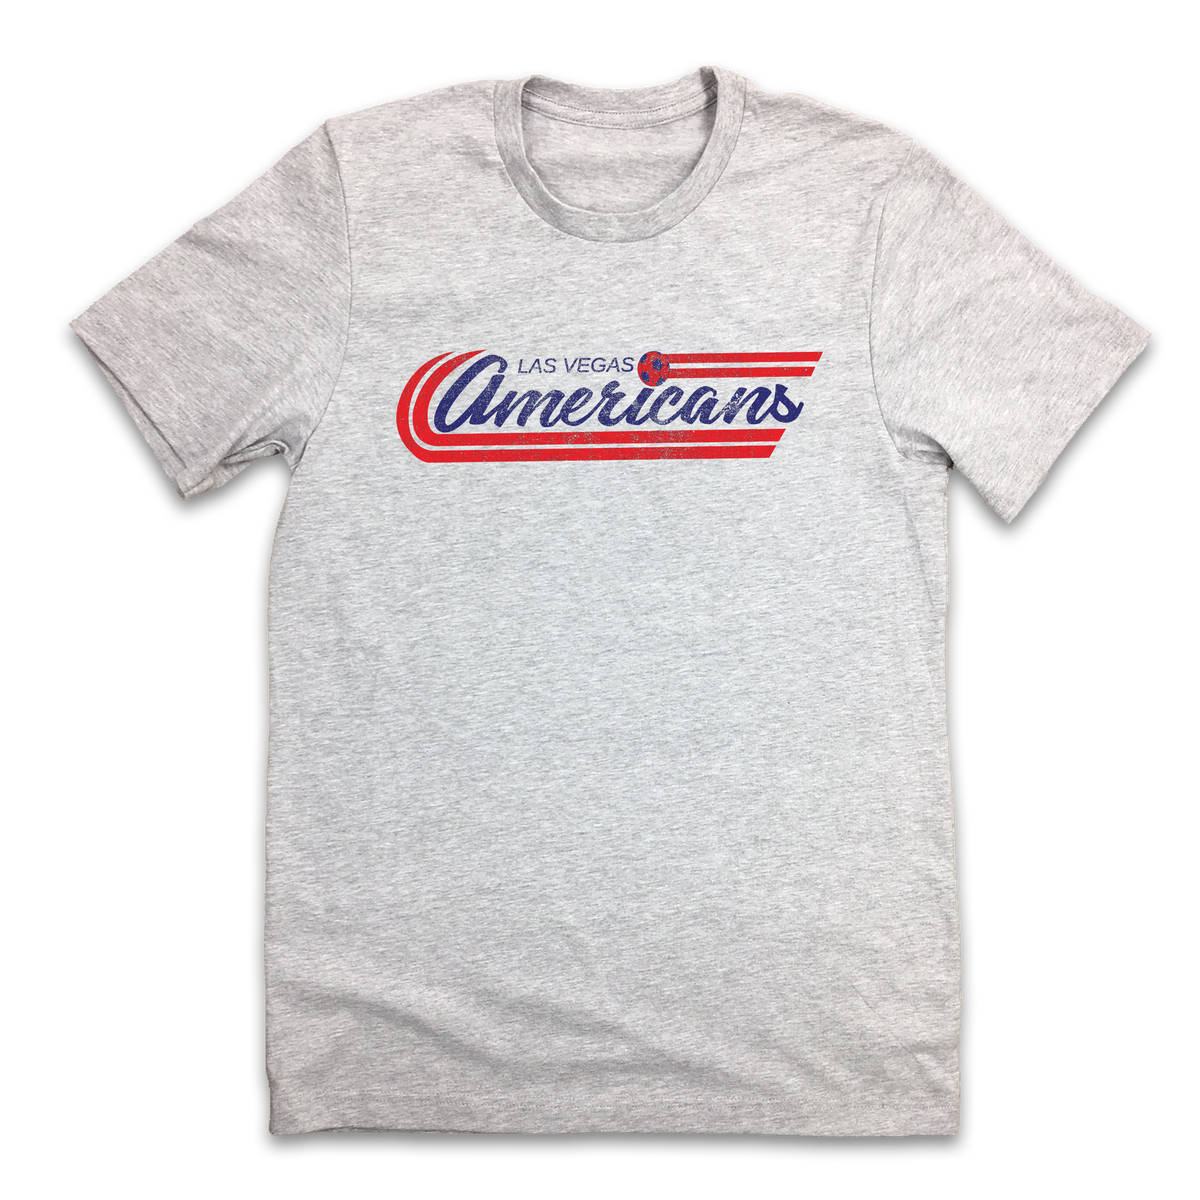 Las Vegas Americans - Old School Shirts- Retro Sports T Shirts